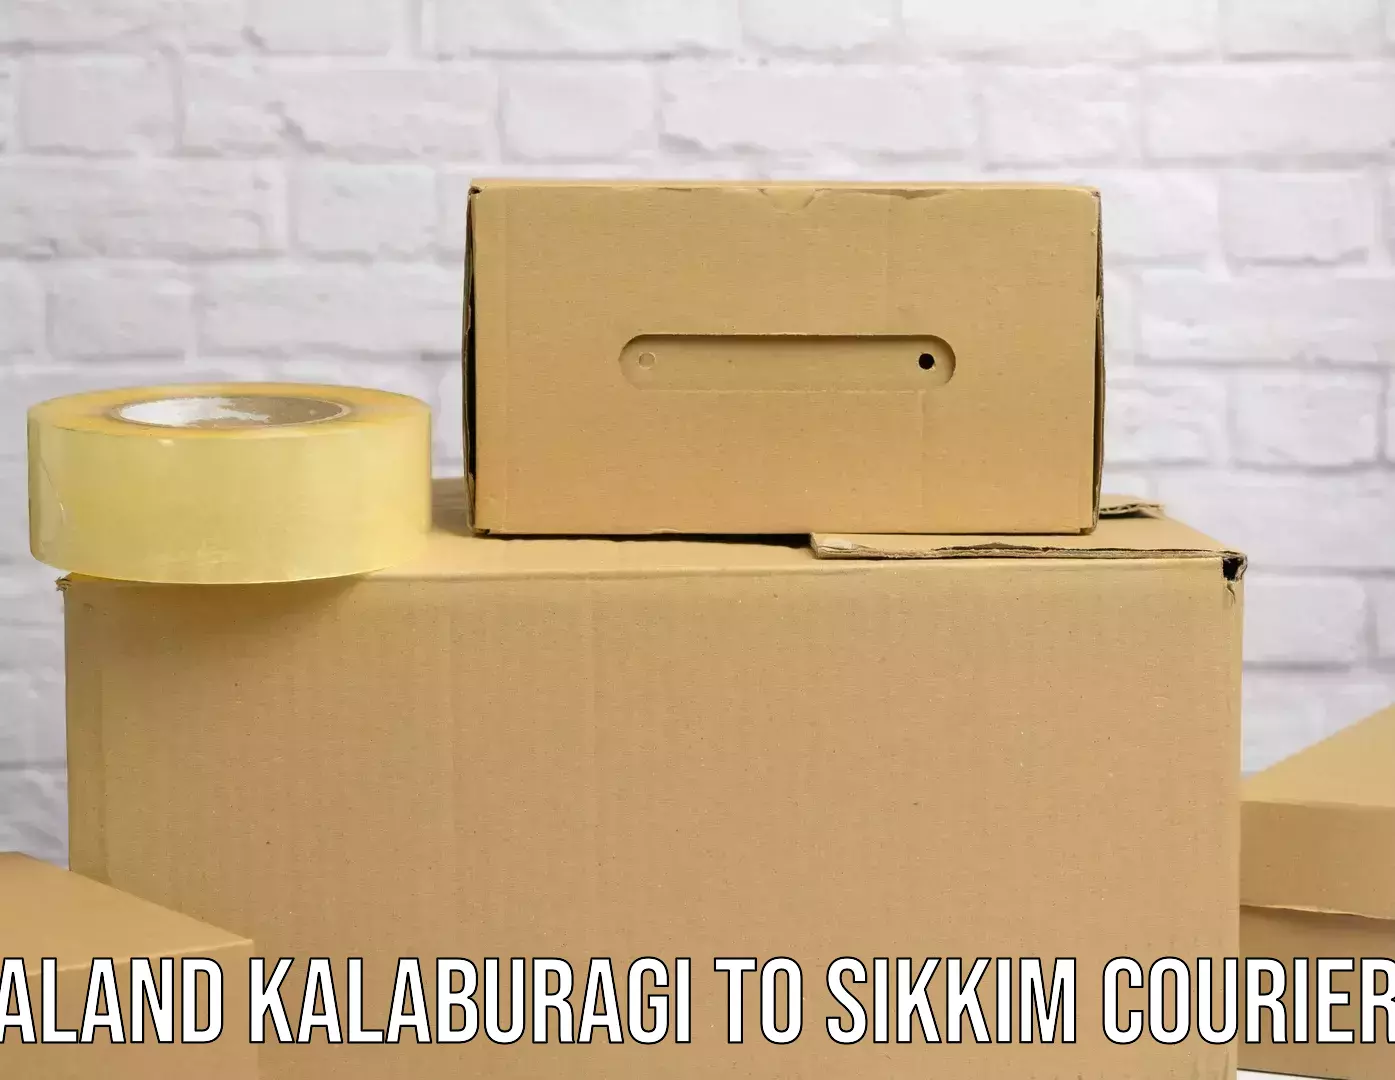 Track and trace shipping Aland Kalaburagi to Sikkim